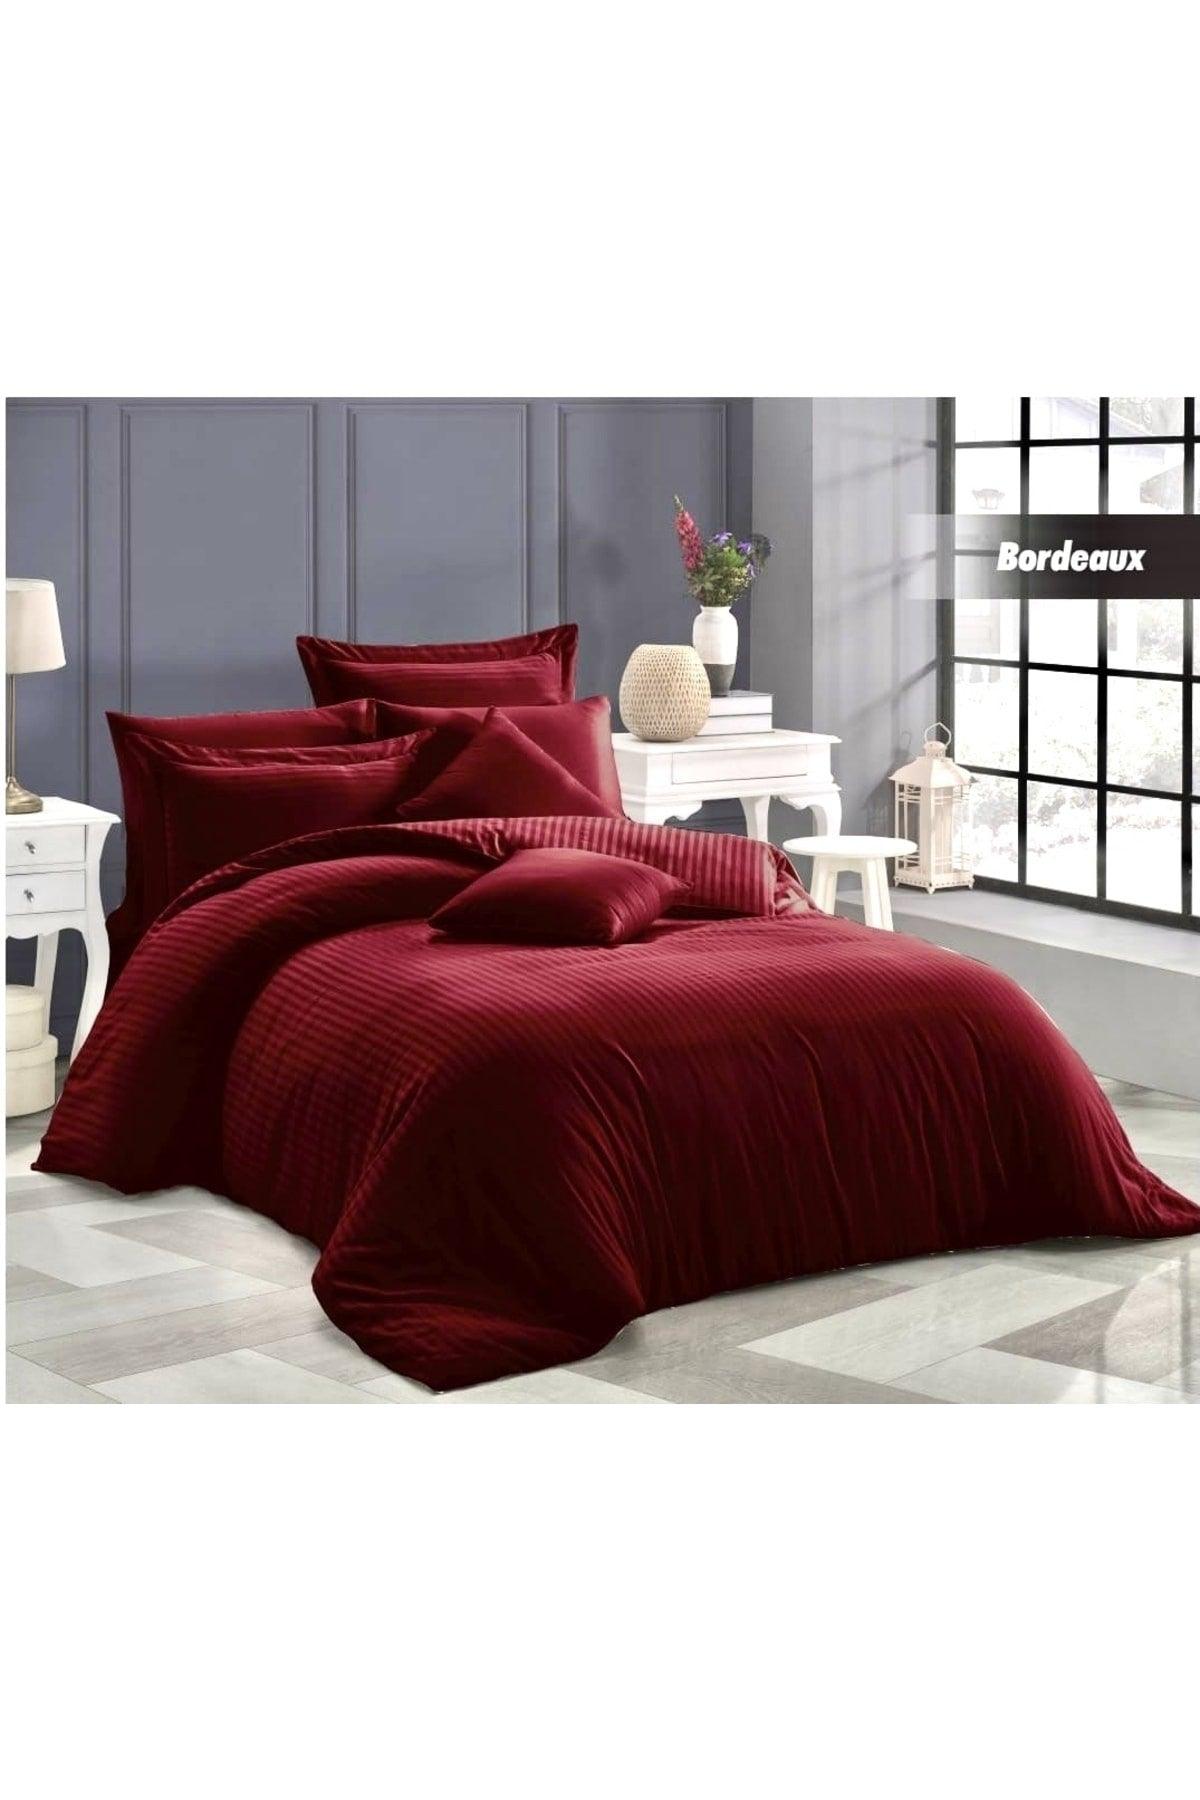 Claret Red Striped Satin Duvet Cover Set 100% Cotton 4 Pillows - Swordslife